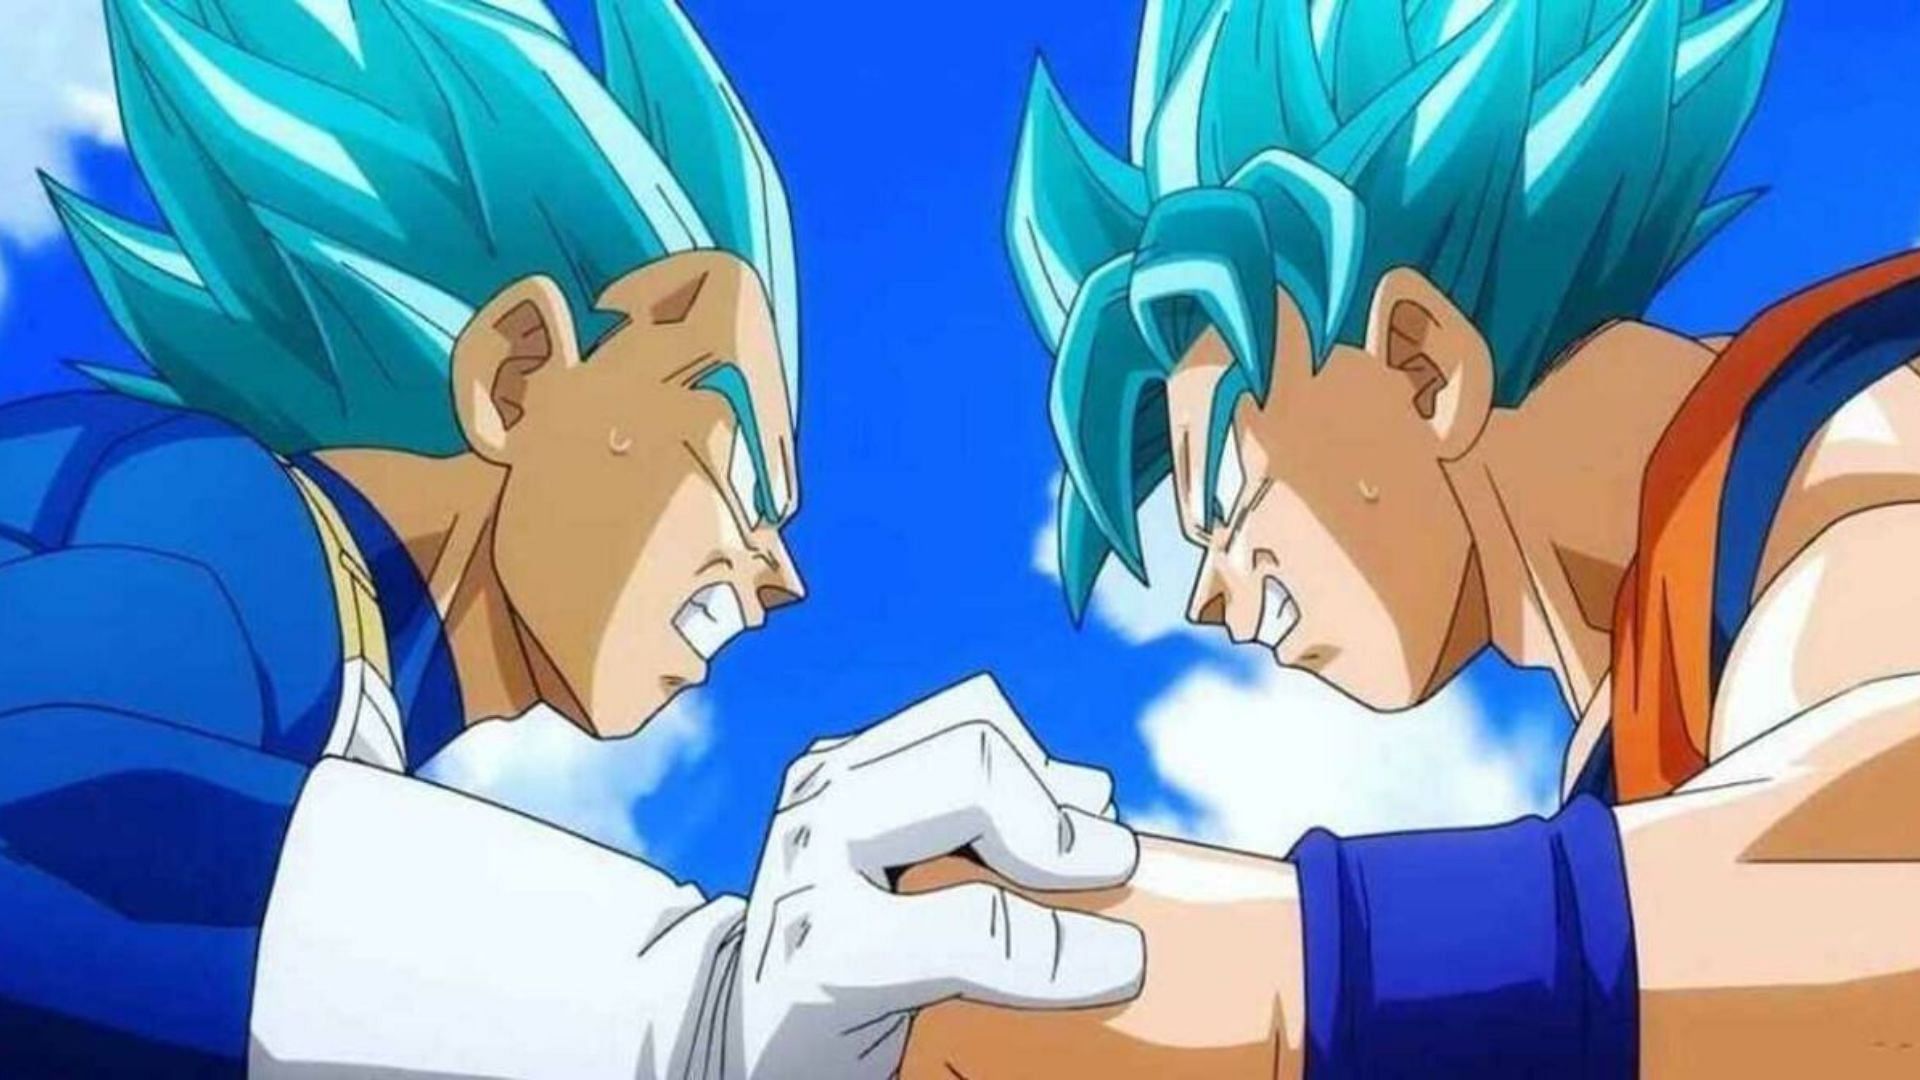 Vegeta and Son Goku as seen in the anime series (Image via Toei Animation)